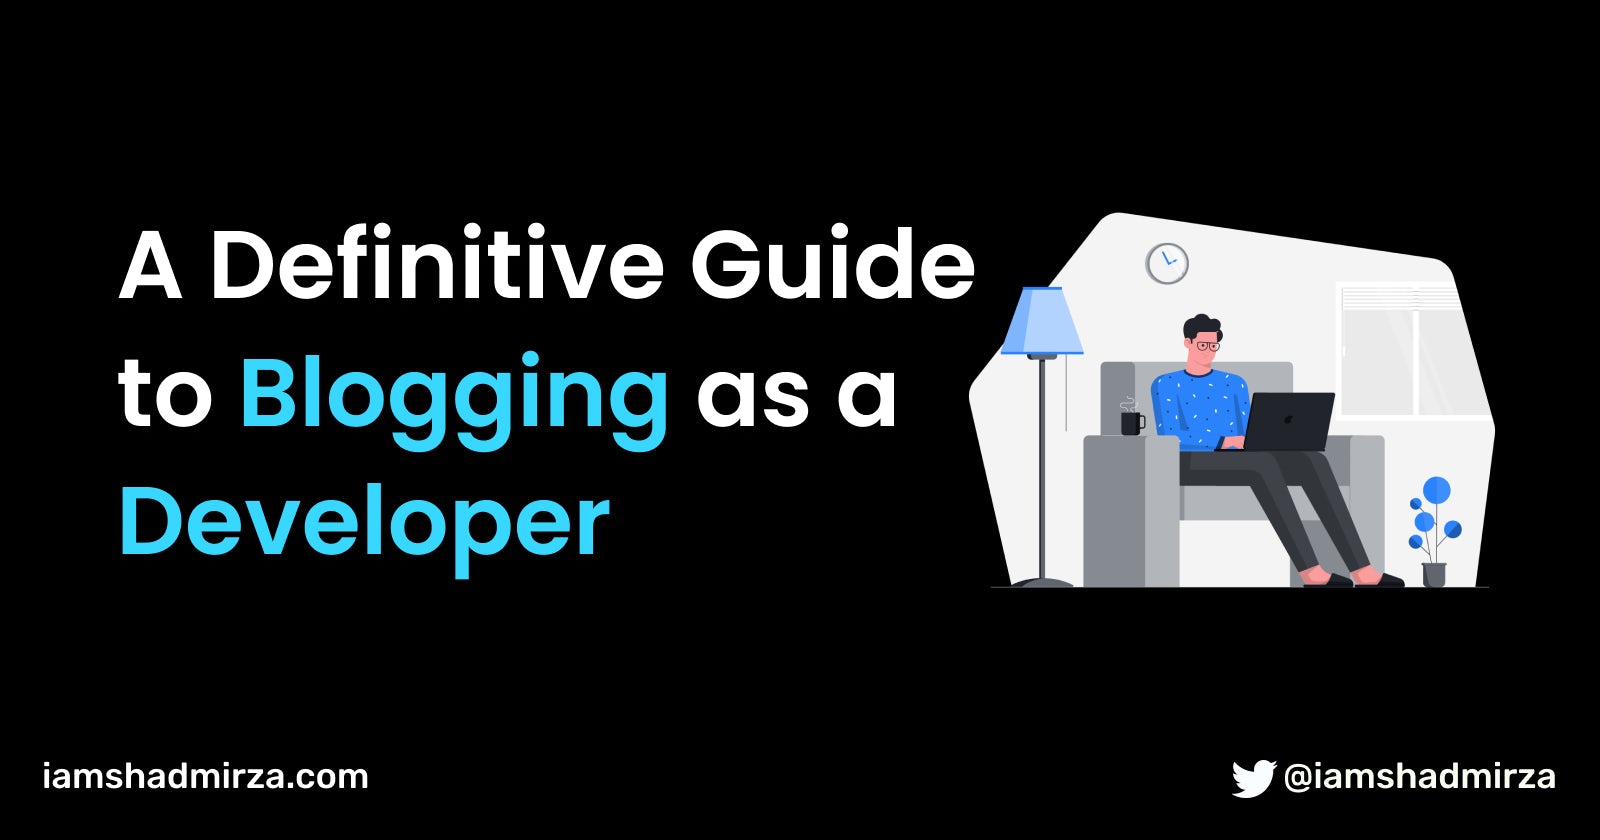 A Definitive Guide to Blogging as a Developer